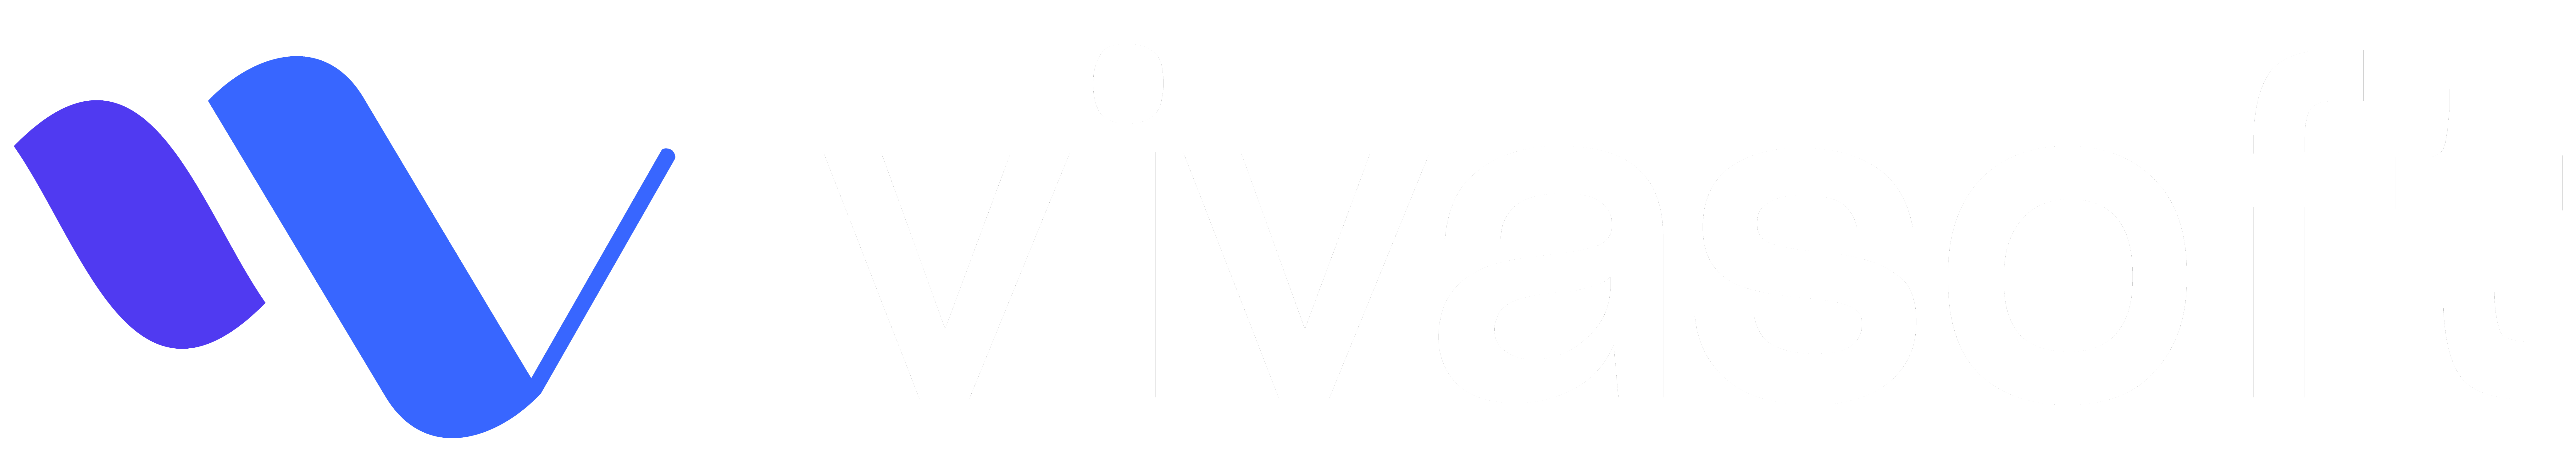 Vivasoft-logo-with-white